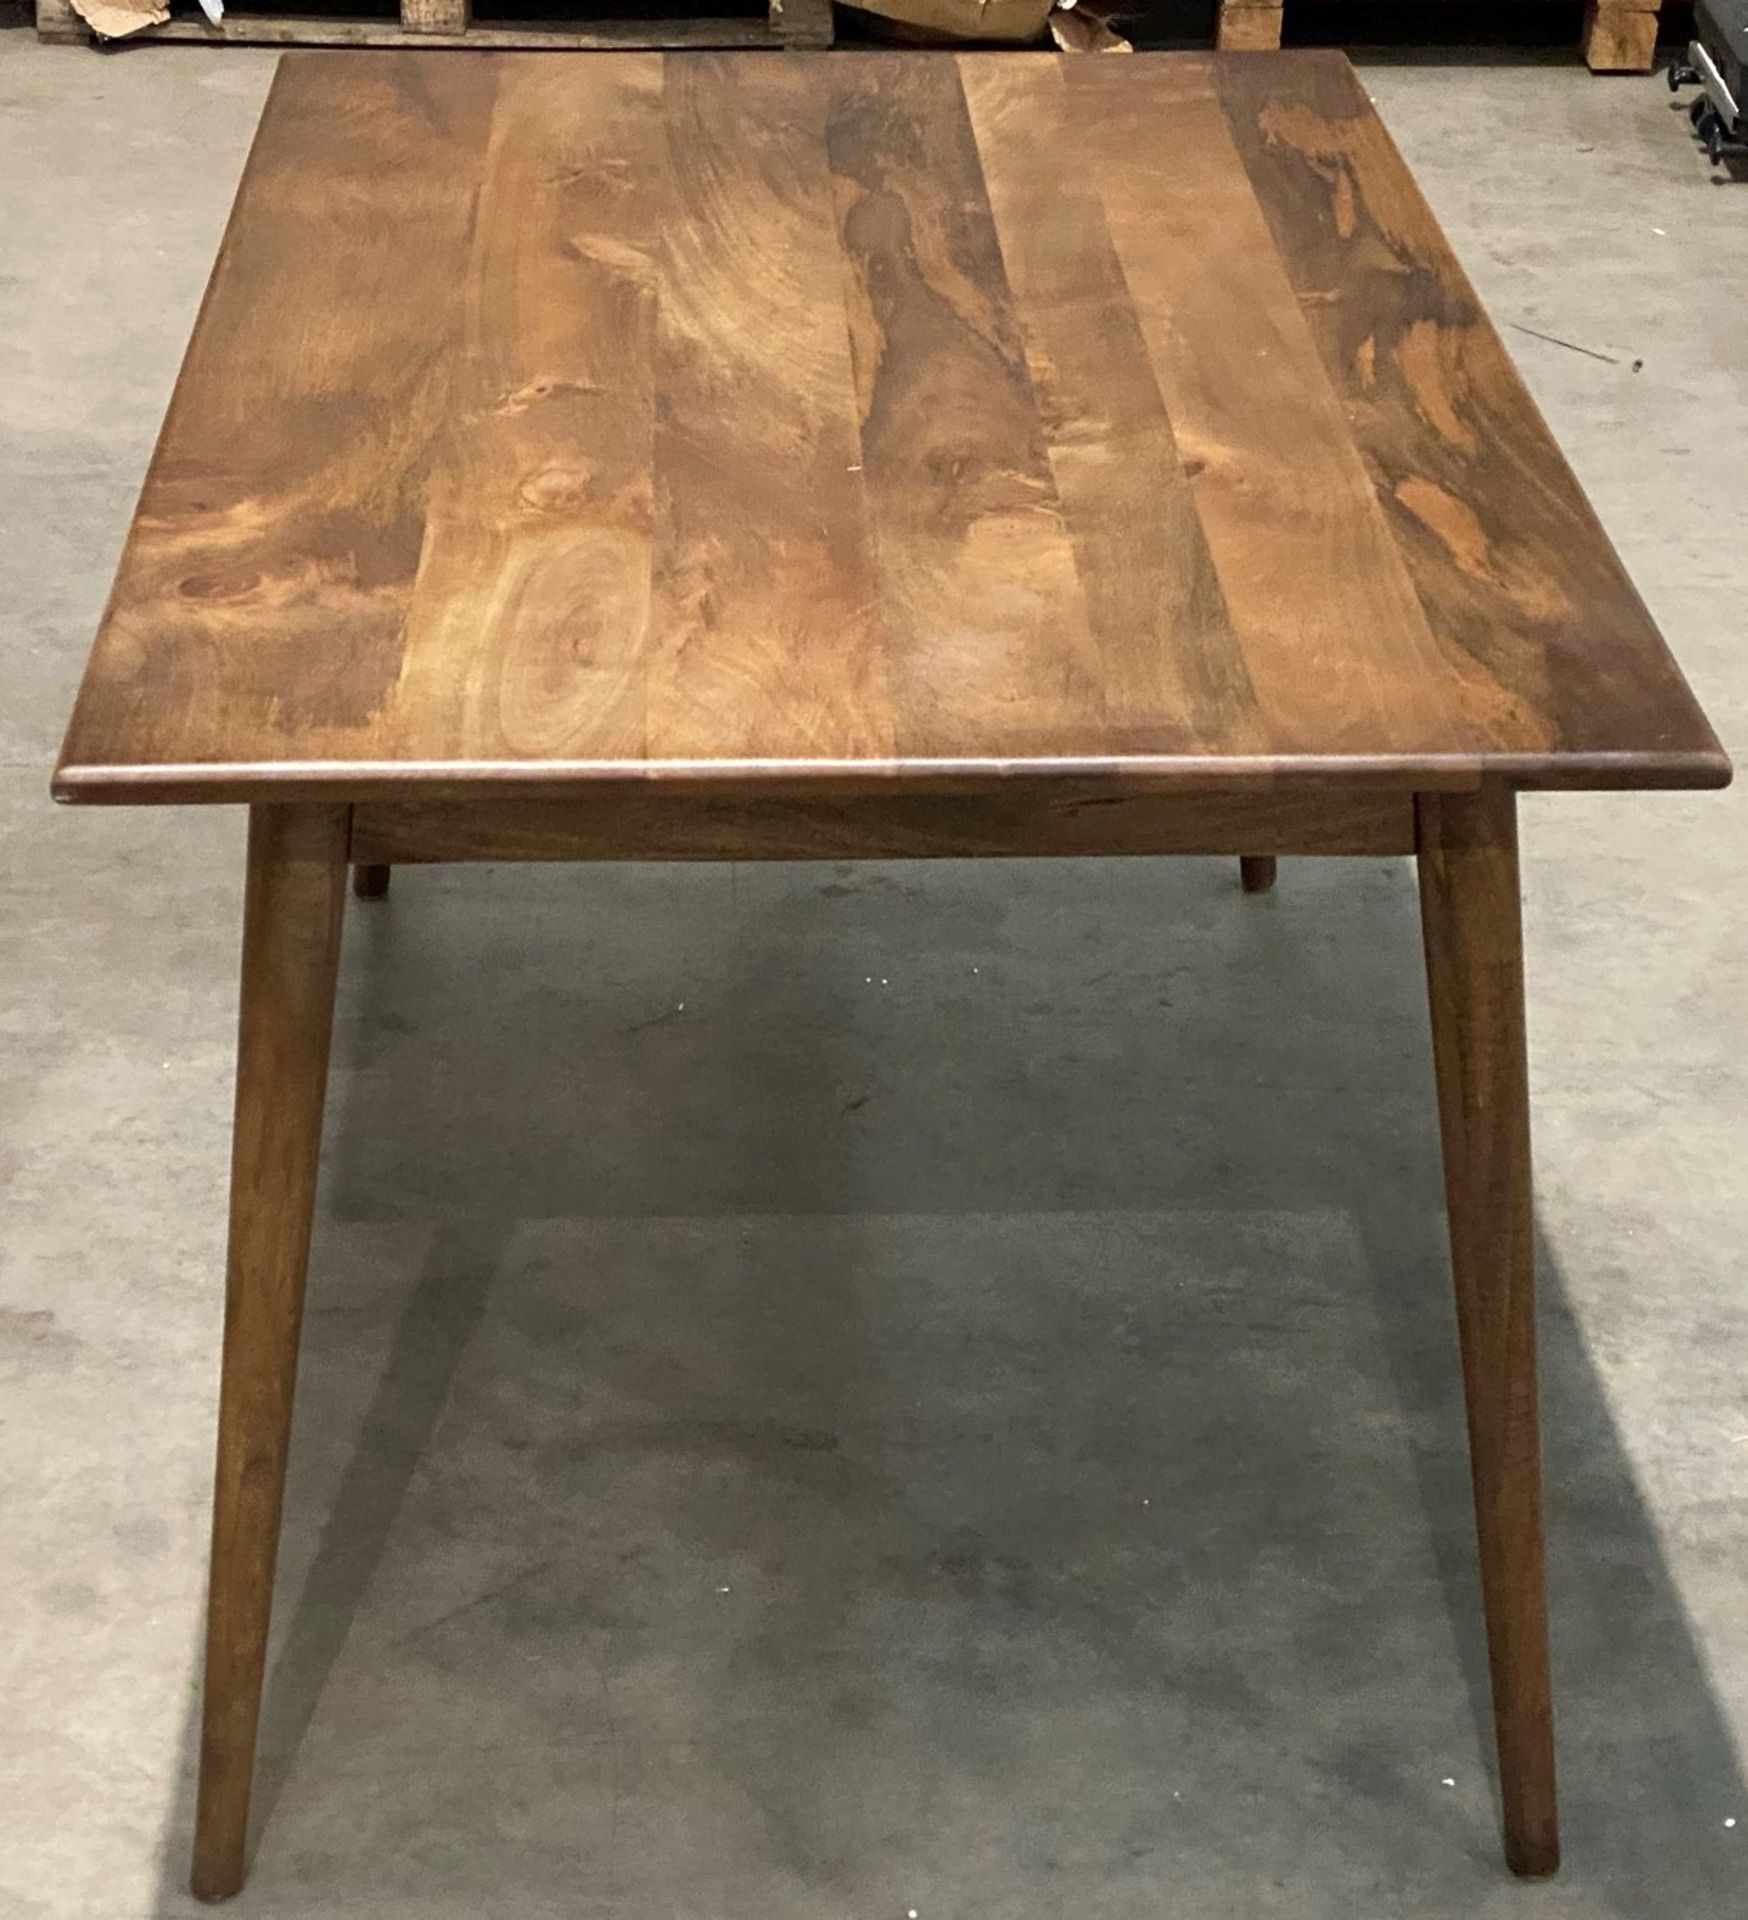 A Retro dark wood dining table - size 150cm x 90cm x 76. - Image 3 of 3